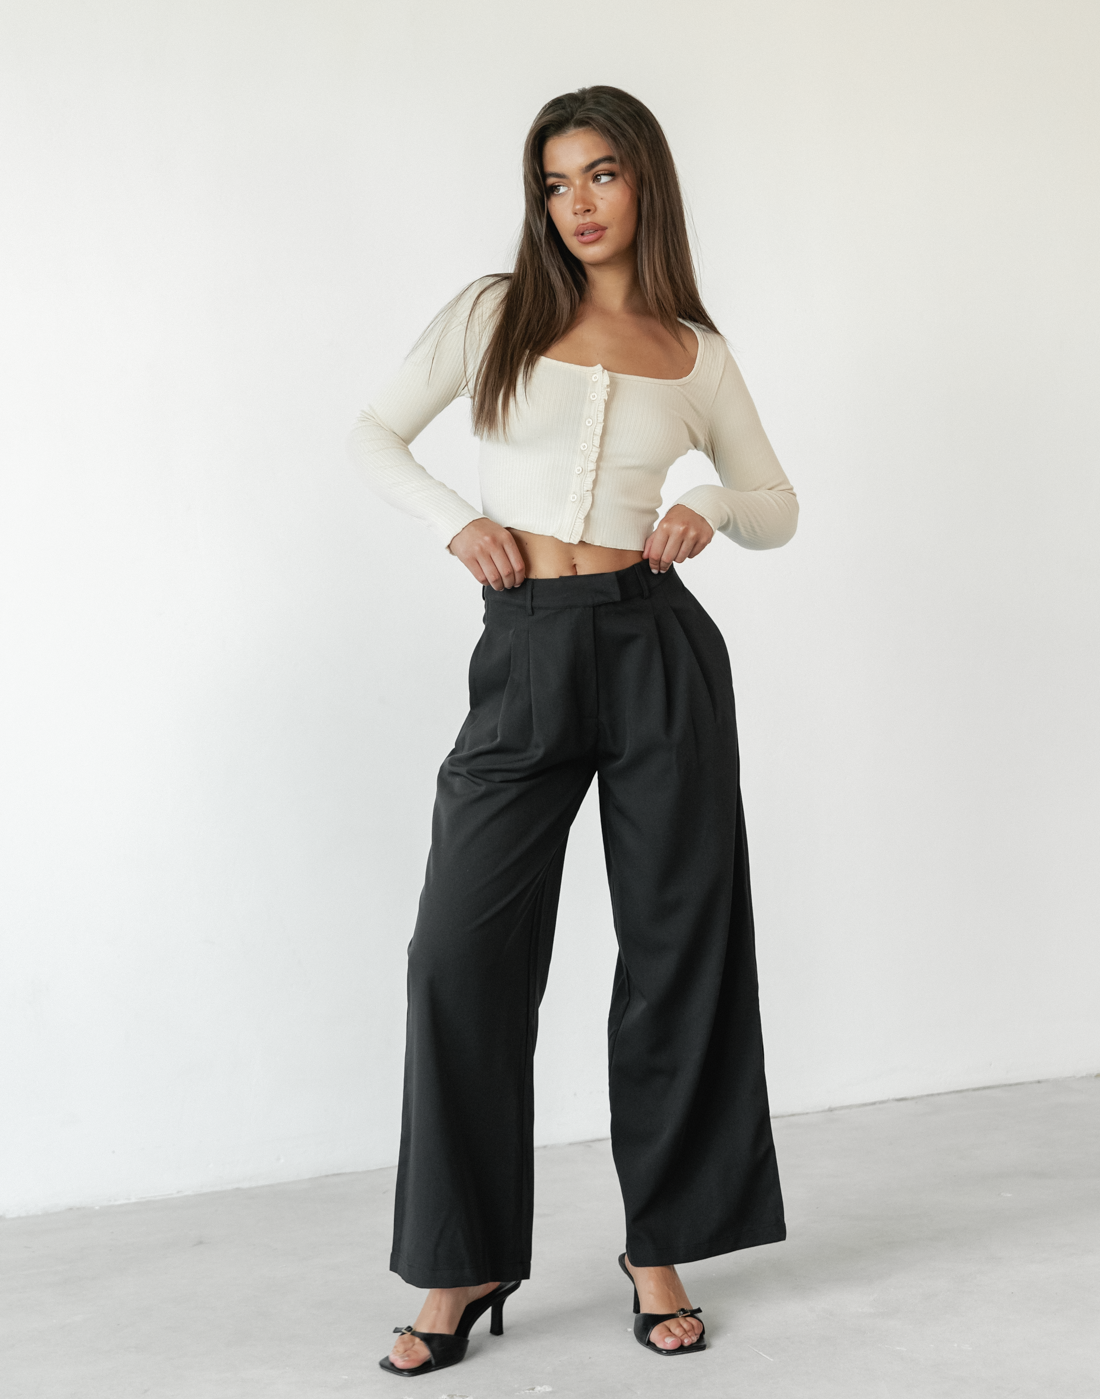 Ruxton Pants (Black) - Black Tailored Pants - Women's Pants - Charcoal Clothing